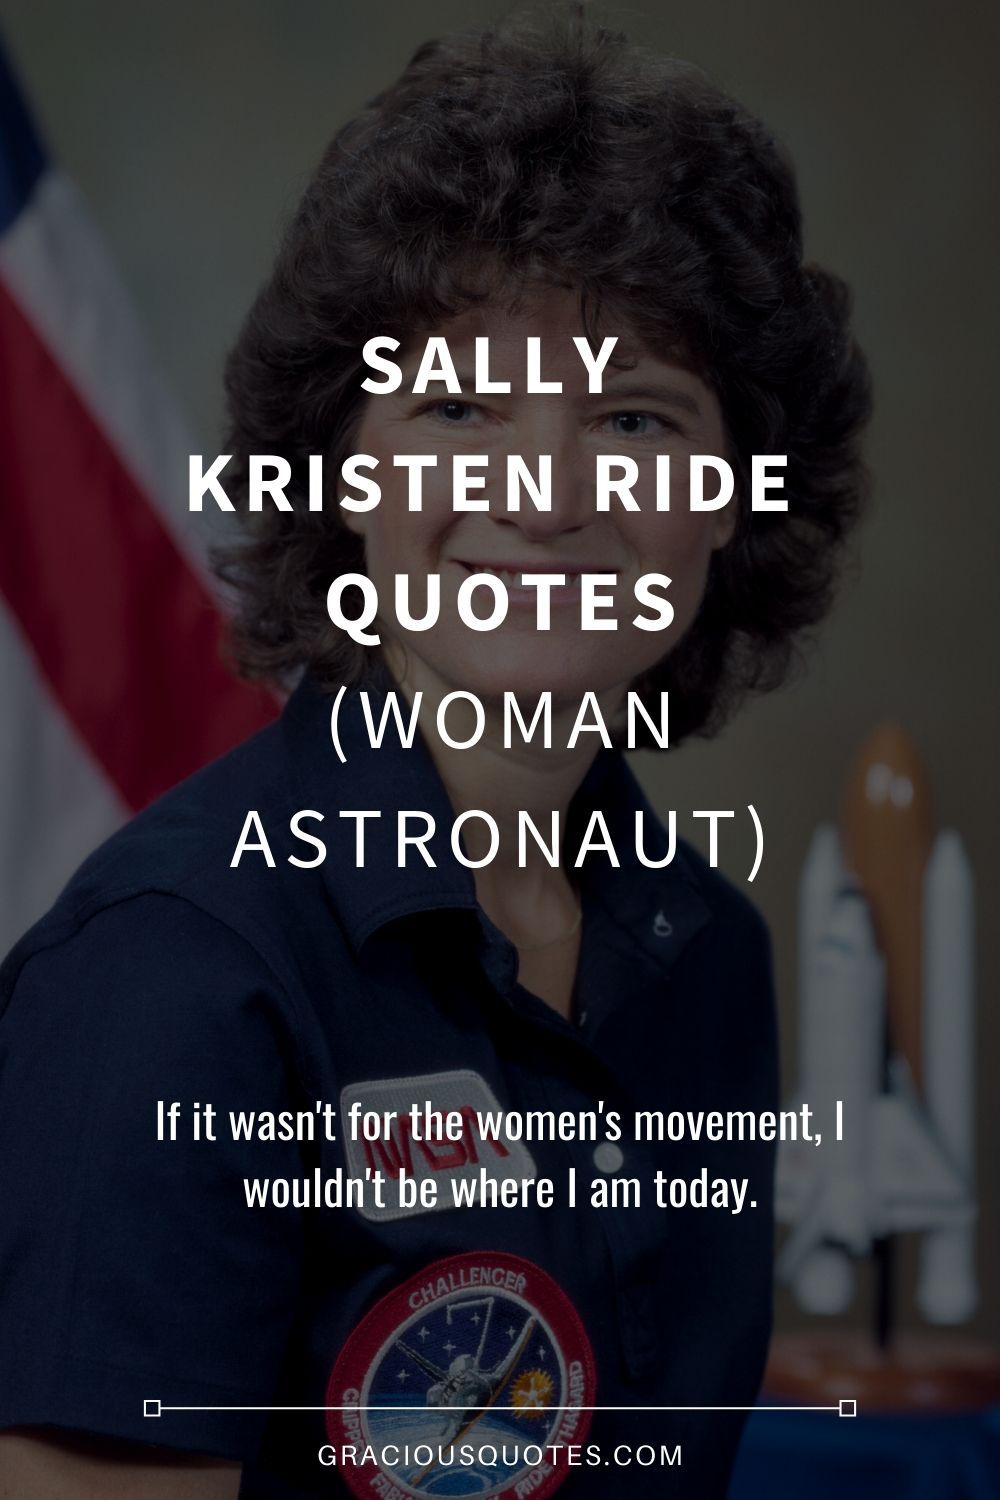 Sally Kristen Ride Quotes (woman ASTRONAUT) - Gracious Quotes